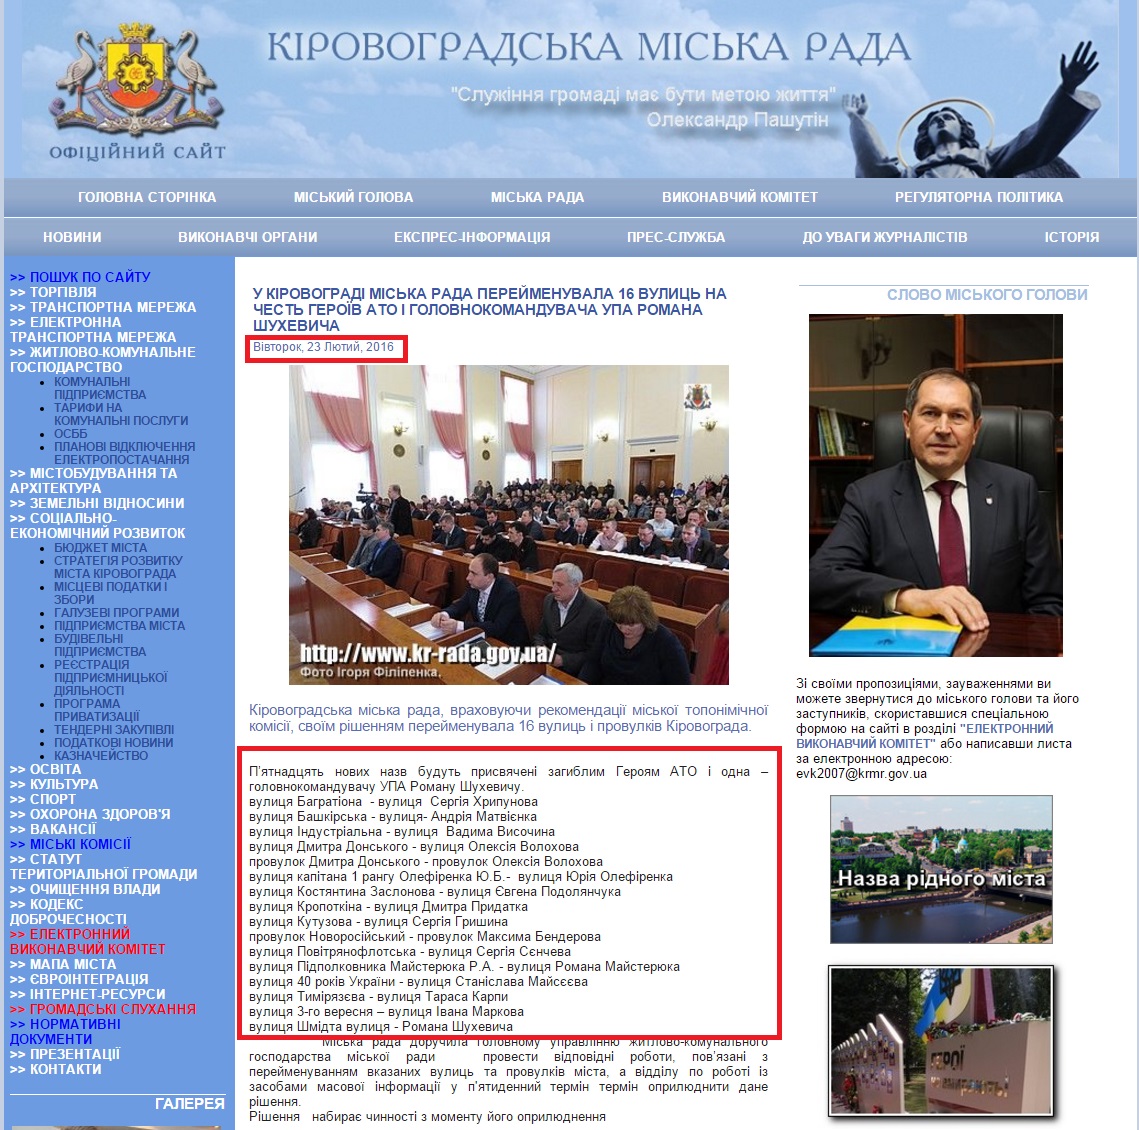 http://www.kr-rada.gov.ua/news/u-kirovogradi-miska-23-2-16.html?page=2